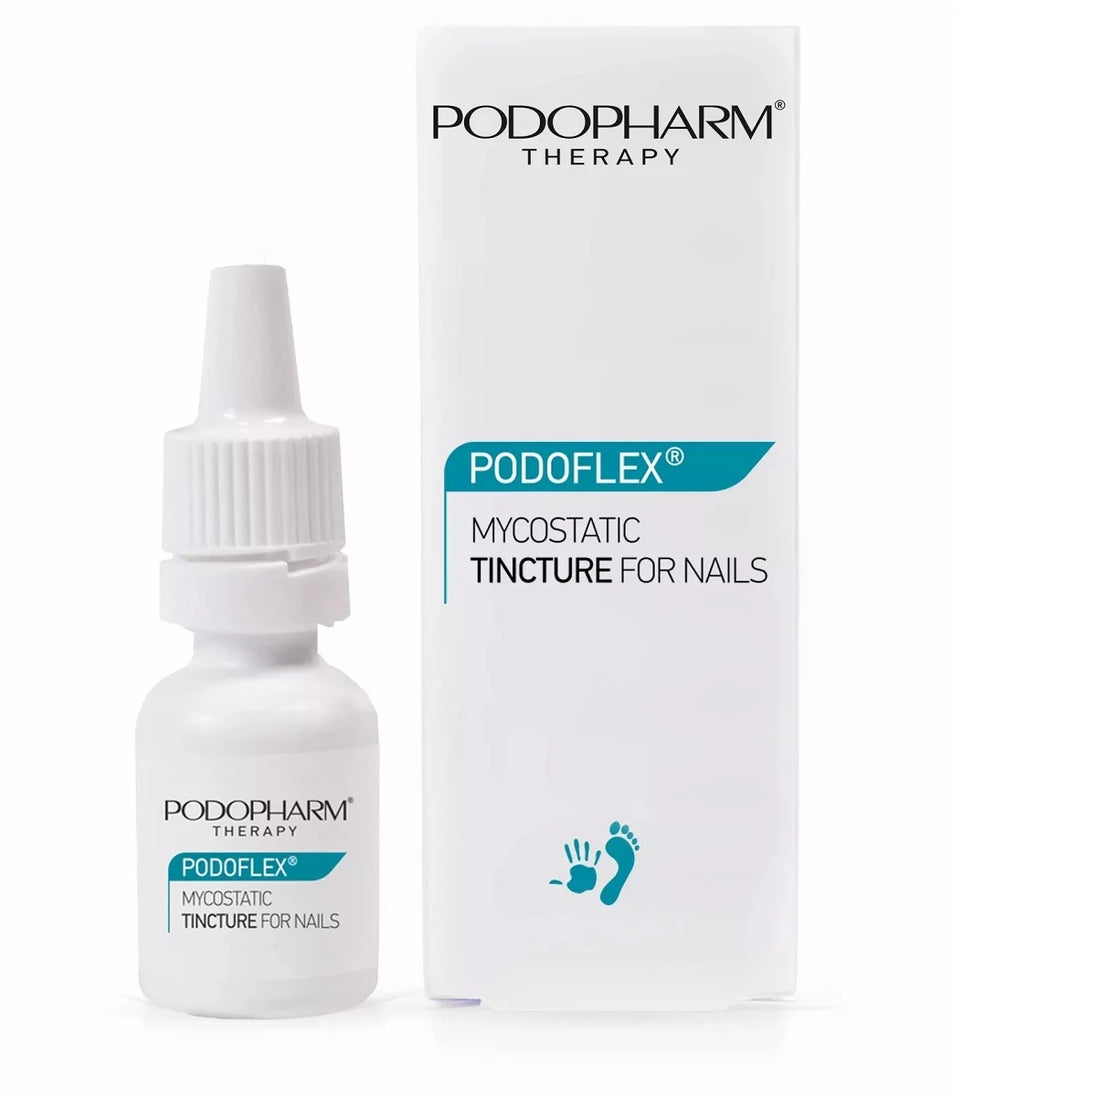 Podopharm Therapy Podoflex Mycostatic Tincture For Nails 10ml Podopharm